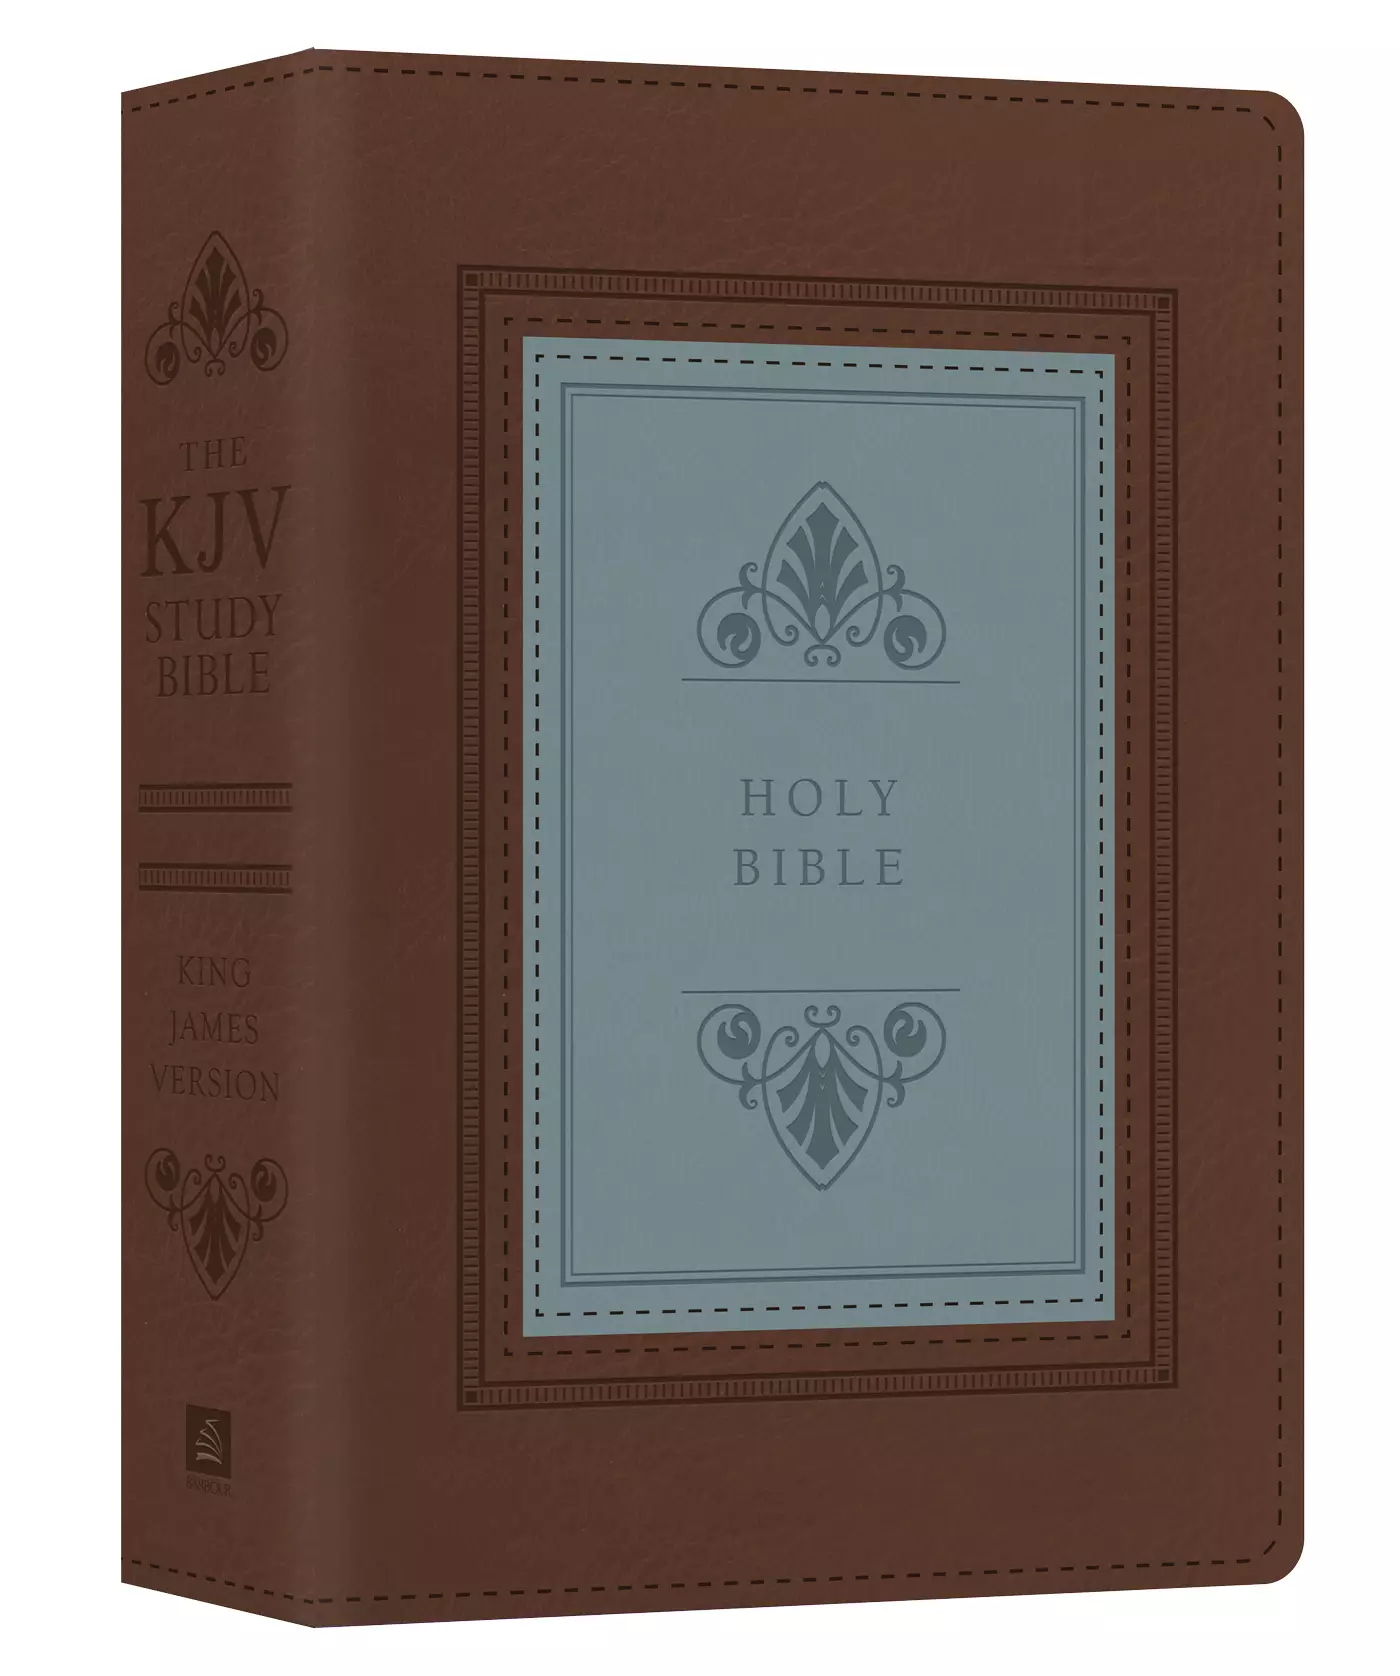 The KJV Study Bible - Large Print - Indexed [teal Inlay]